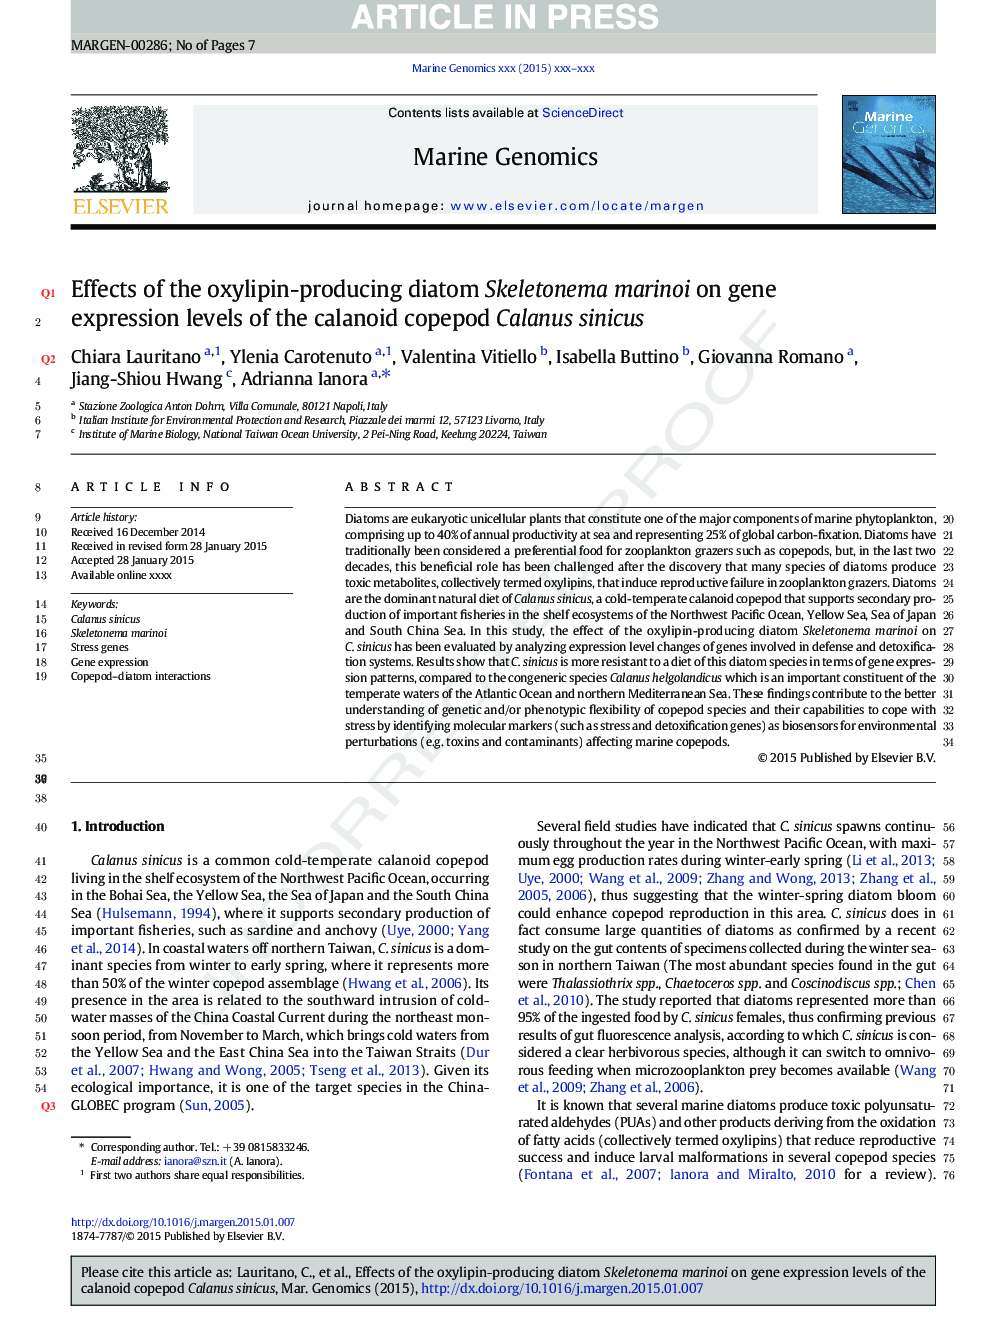 Effects of the oxylipin-producing diatom Skeletonema marinoi on gene expression levels of the calanoid copepod Calanus sinicus